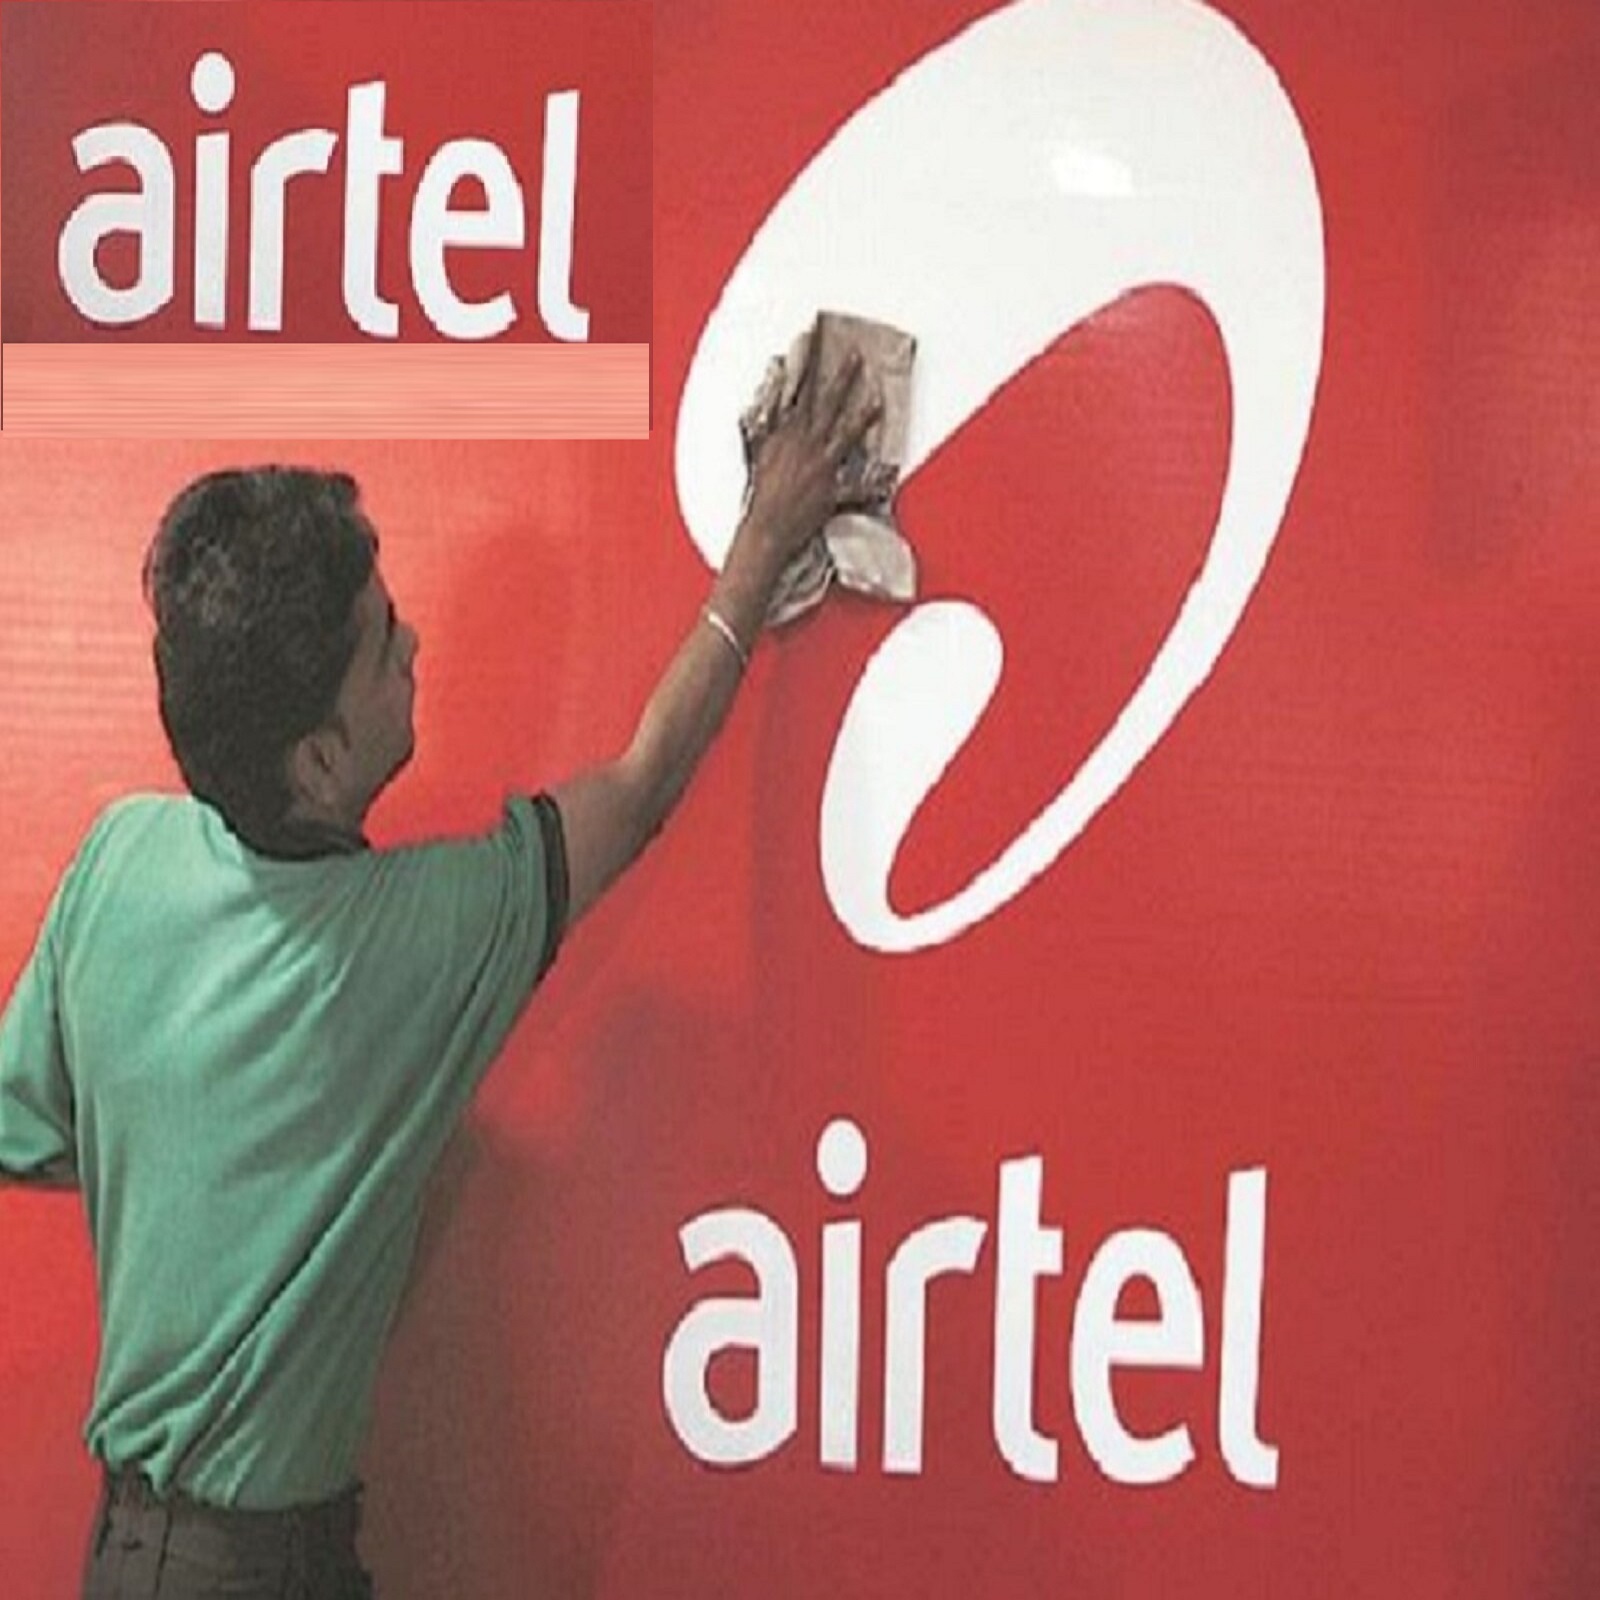 Airtel Nigeria spends $316M on 4G, 5G spectrum - Mobile World Live